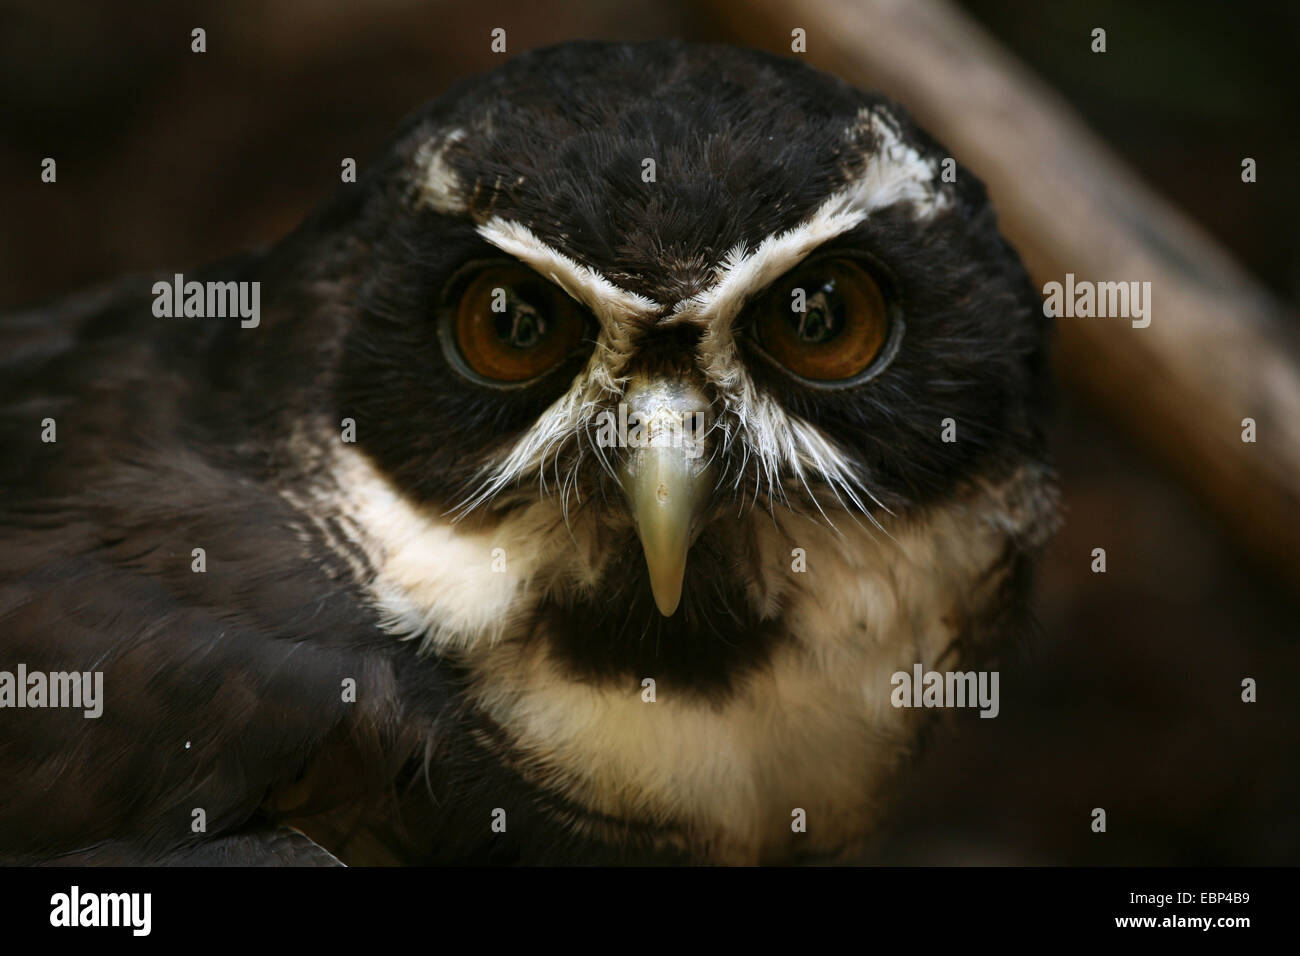 Spectacled owl (Pulsatrix perspicillata) at Basel Zoo, Switzerland. Stock Photo